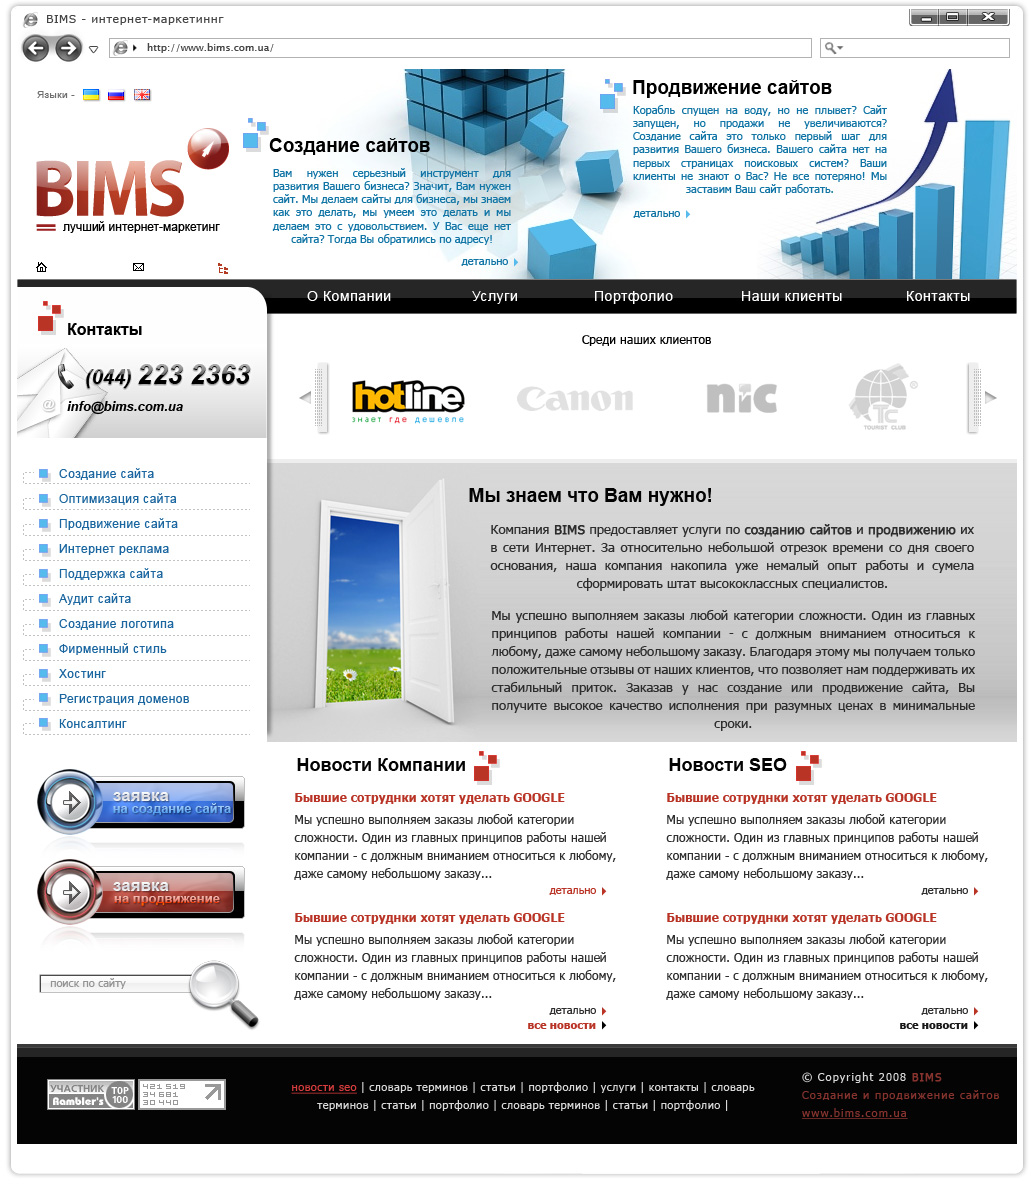 Дизайн сайта BIMS